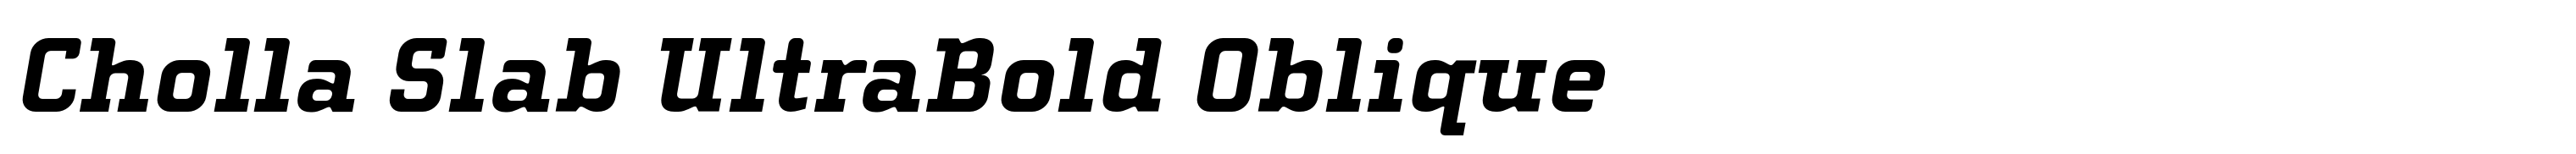 Cholla Slab UltraBold Oblique